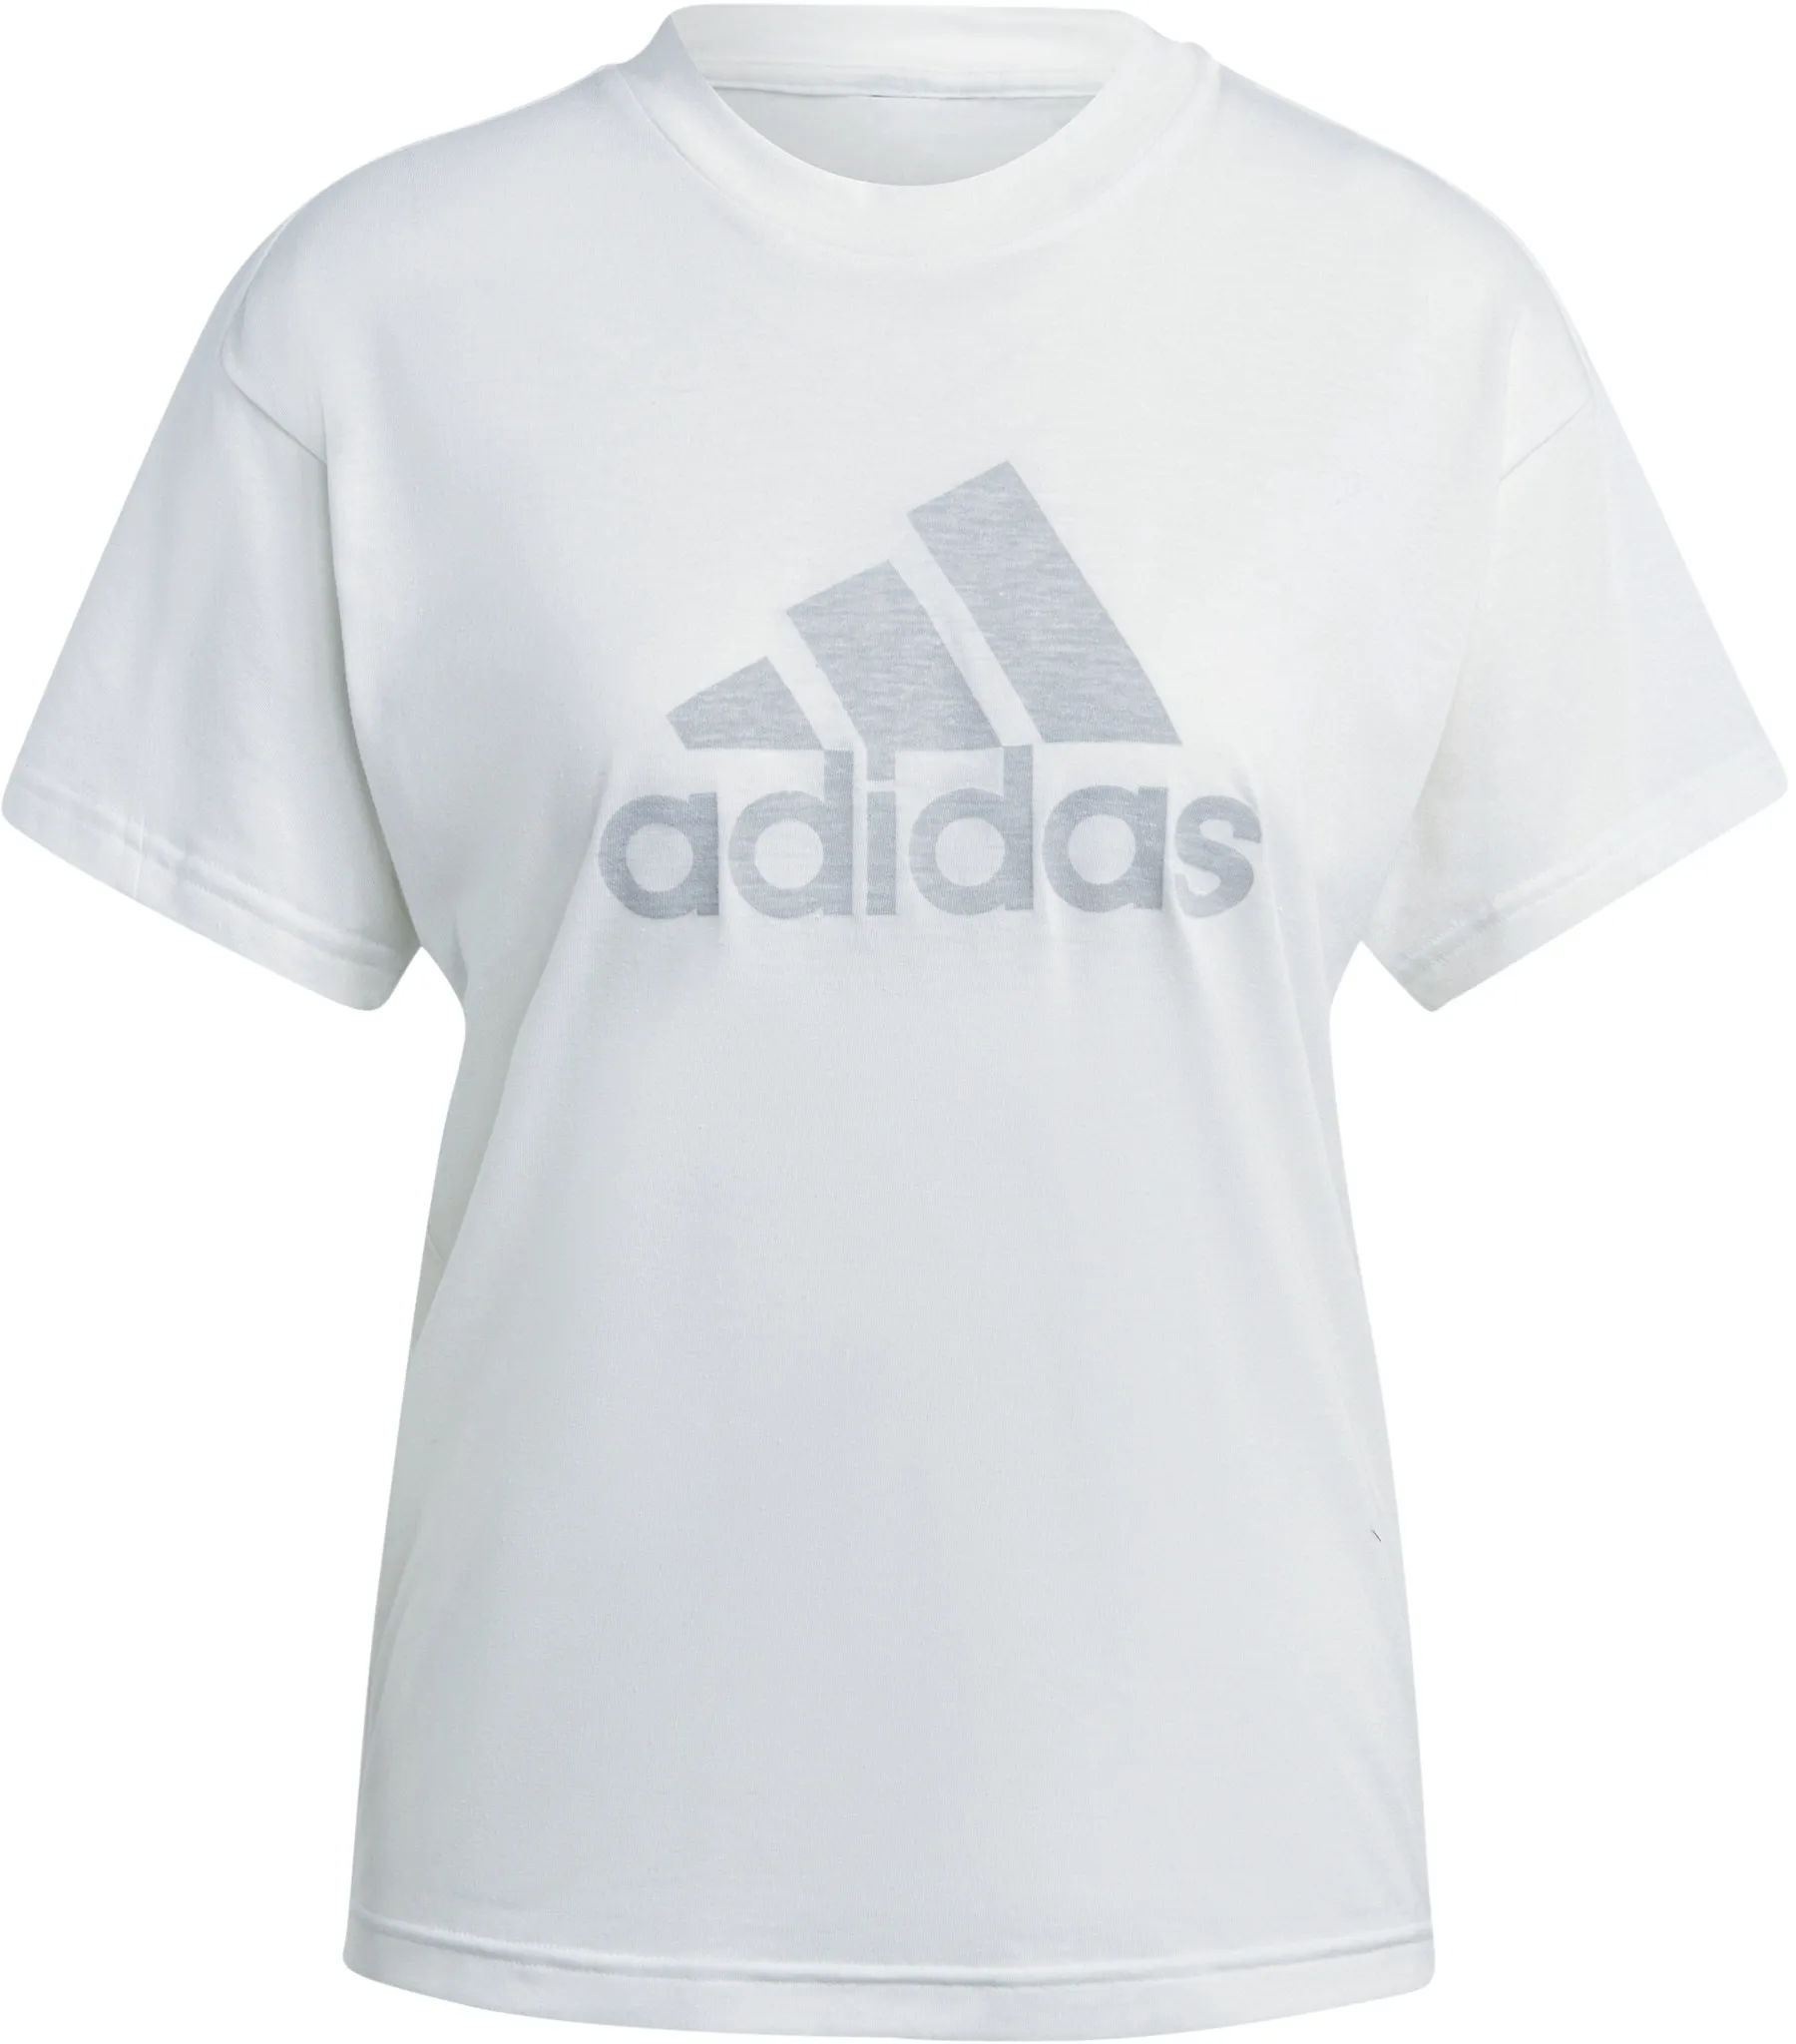 adidas WINRS 3.0 Damen T-Shirt weiß/grau - XL